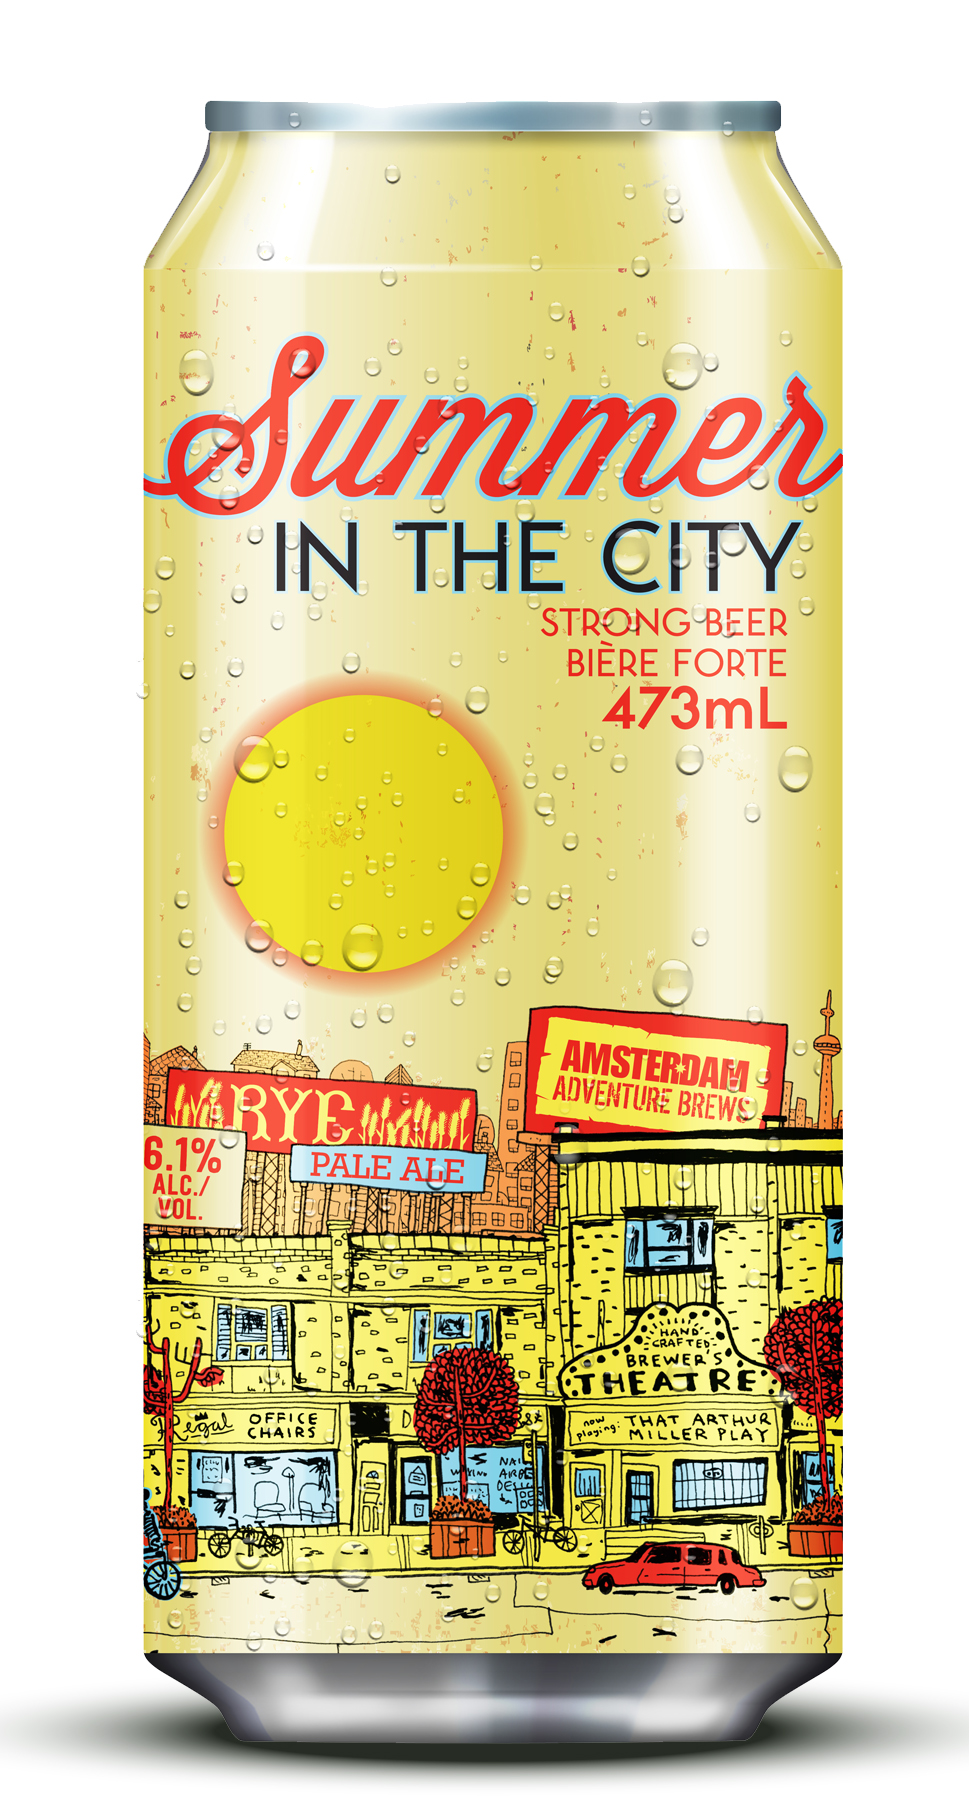 Adbrew17 - Summer in the City.jpg